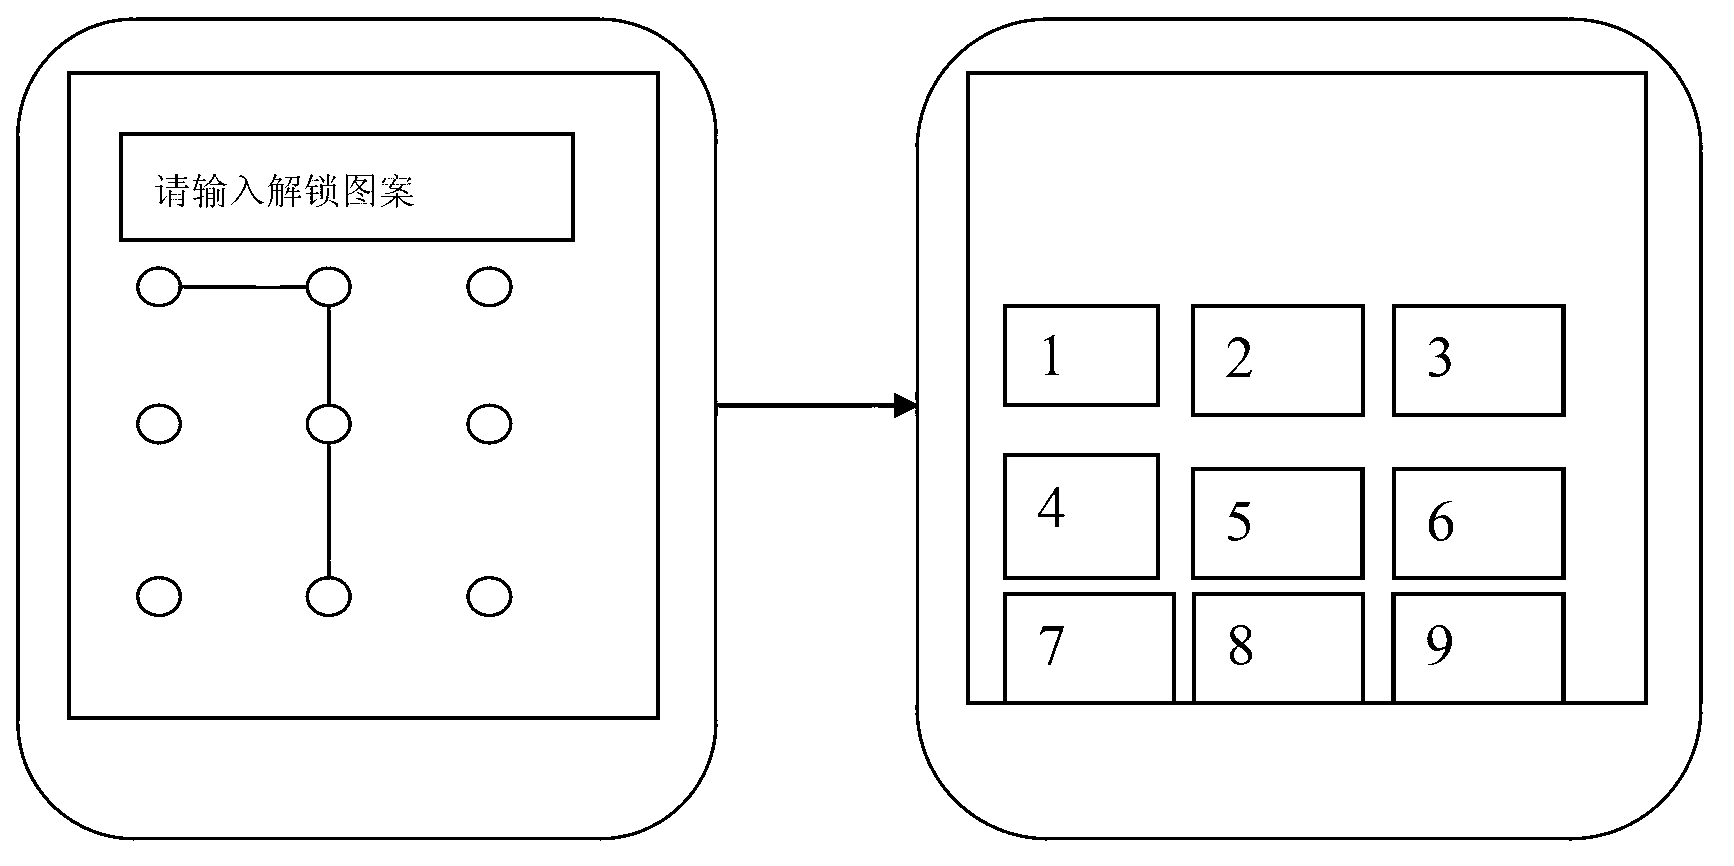 Screen unlocking method for mobile terminal